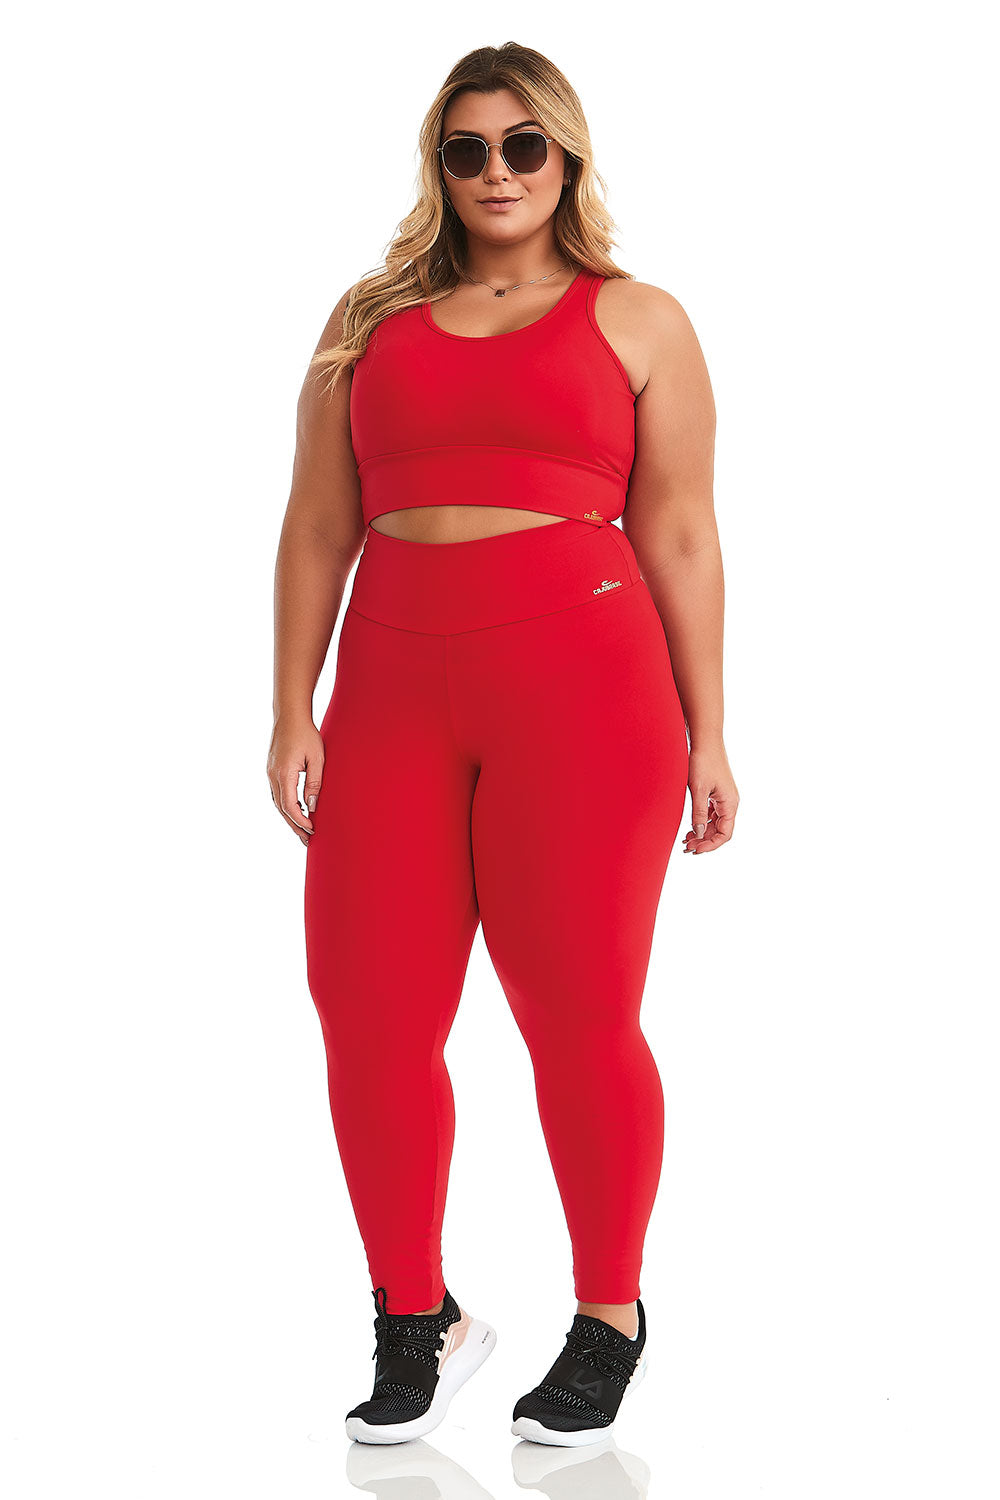 Cajubrasil Plus Size NZ Brave Legging Pants -Red, 8014200